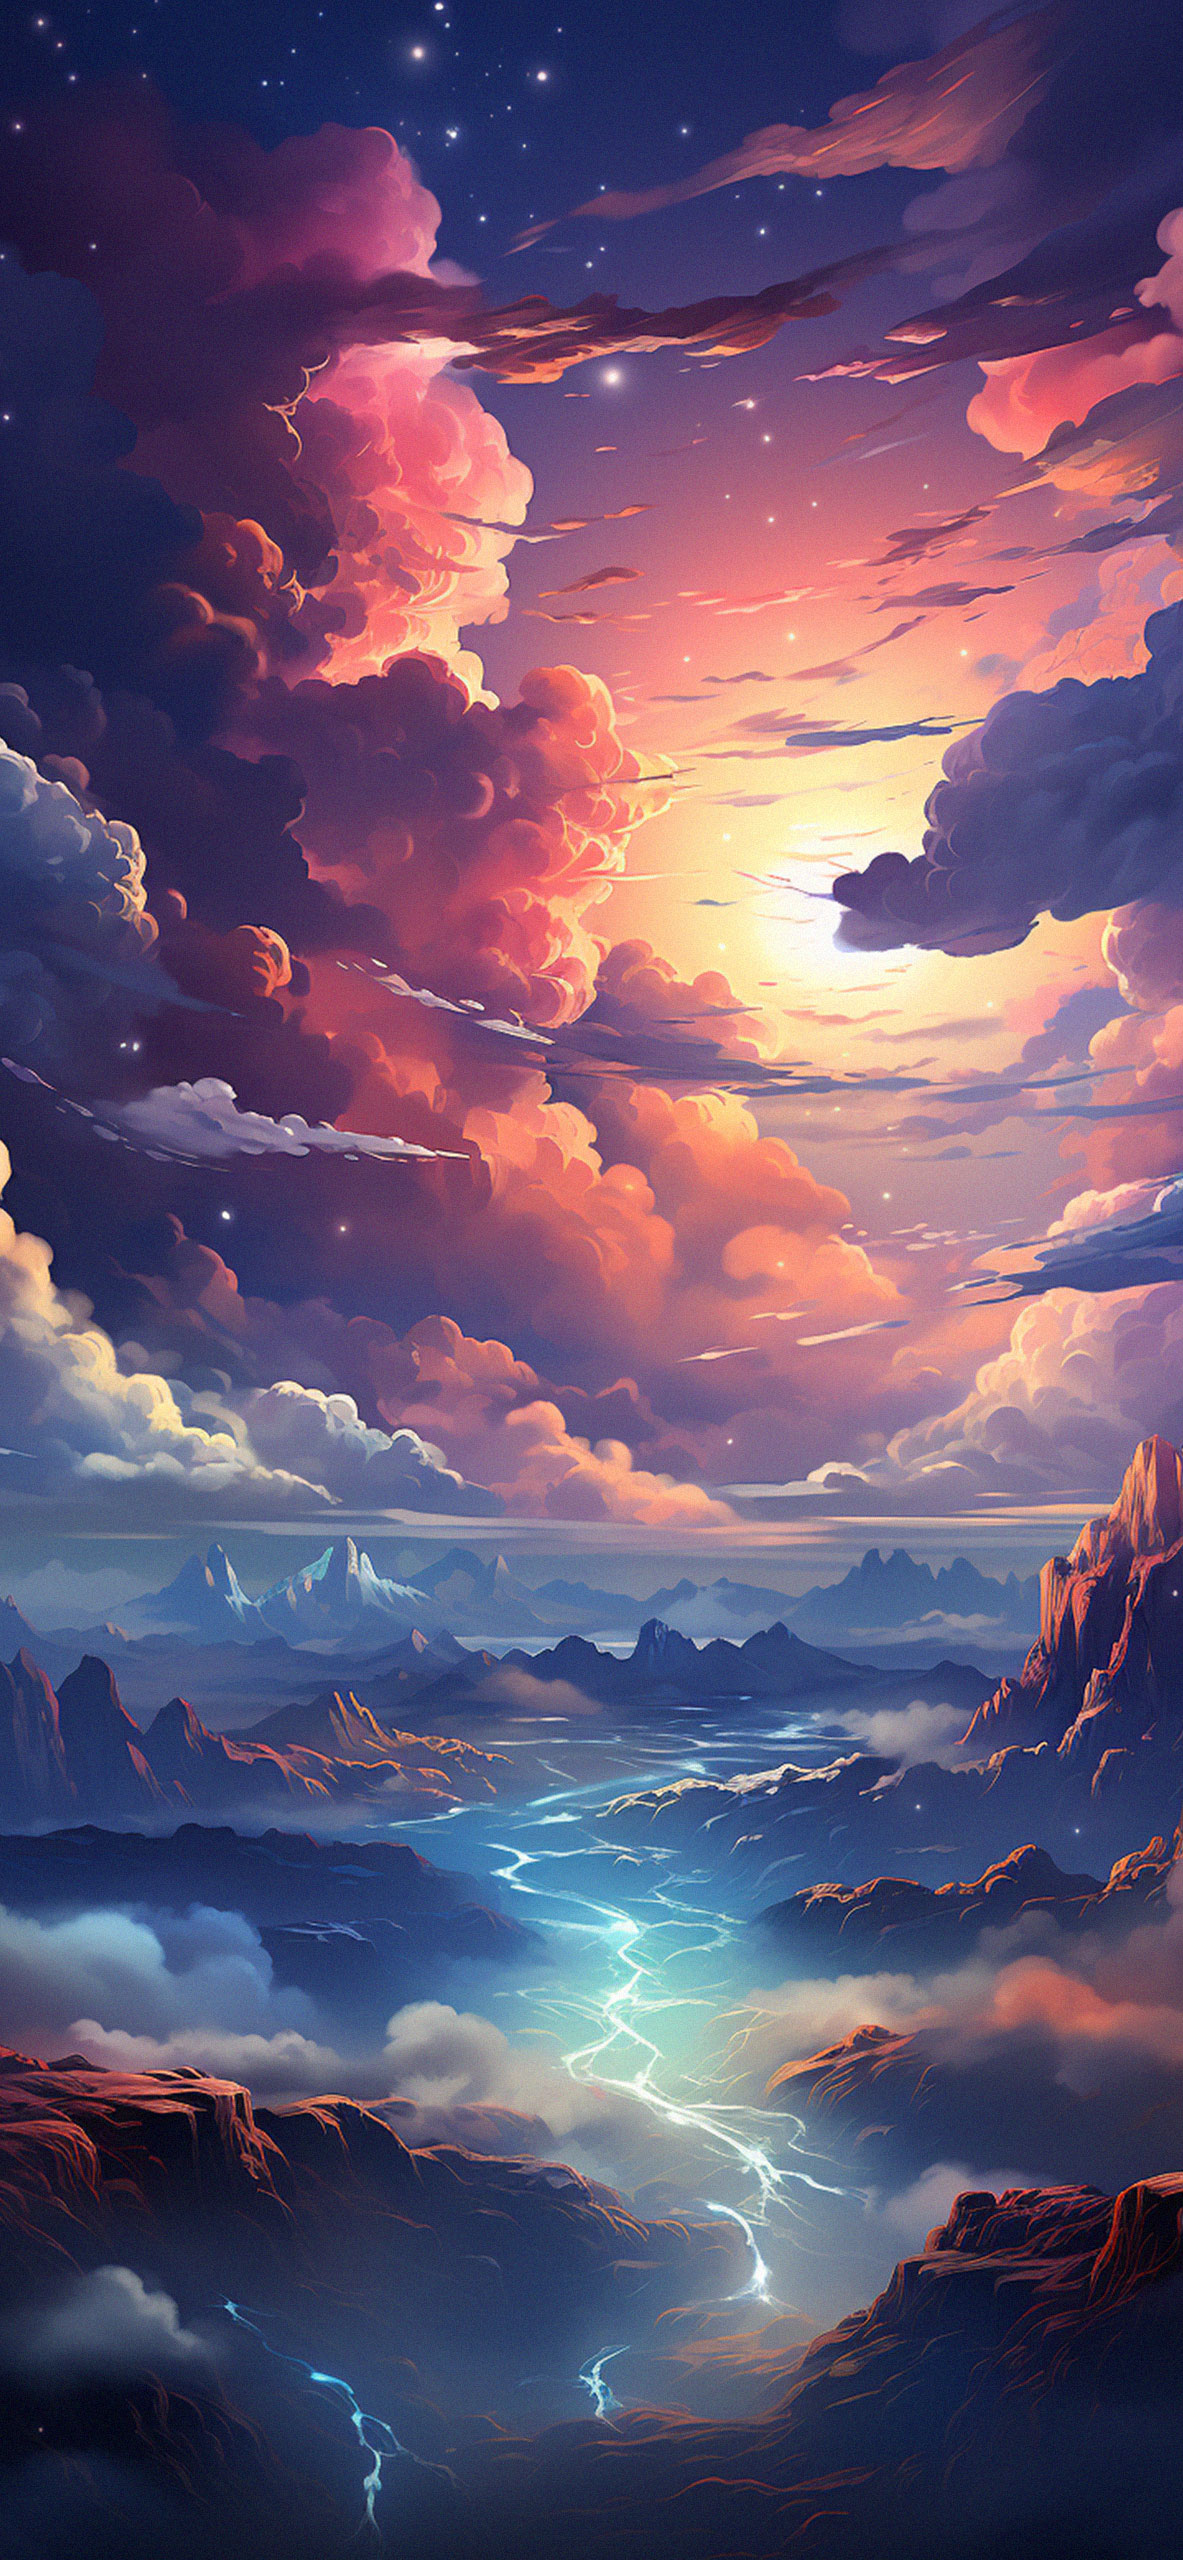 Fantasy Mountains & Clouds Landscape Wallpaper Mountains Lands